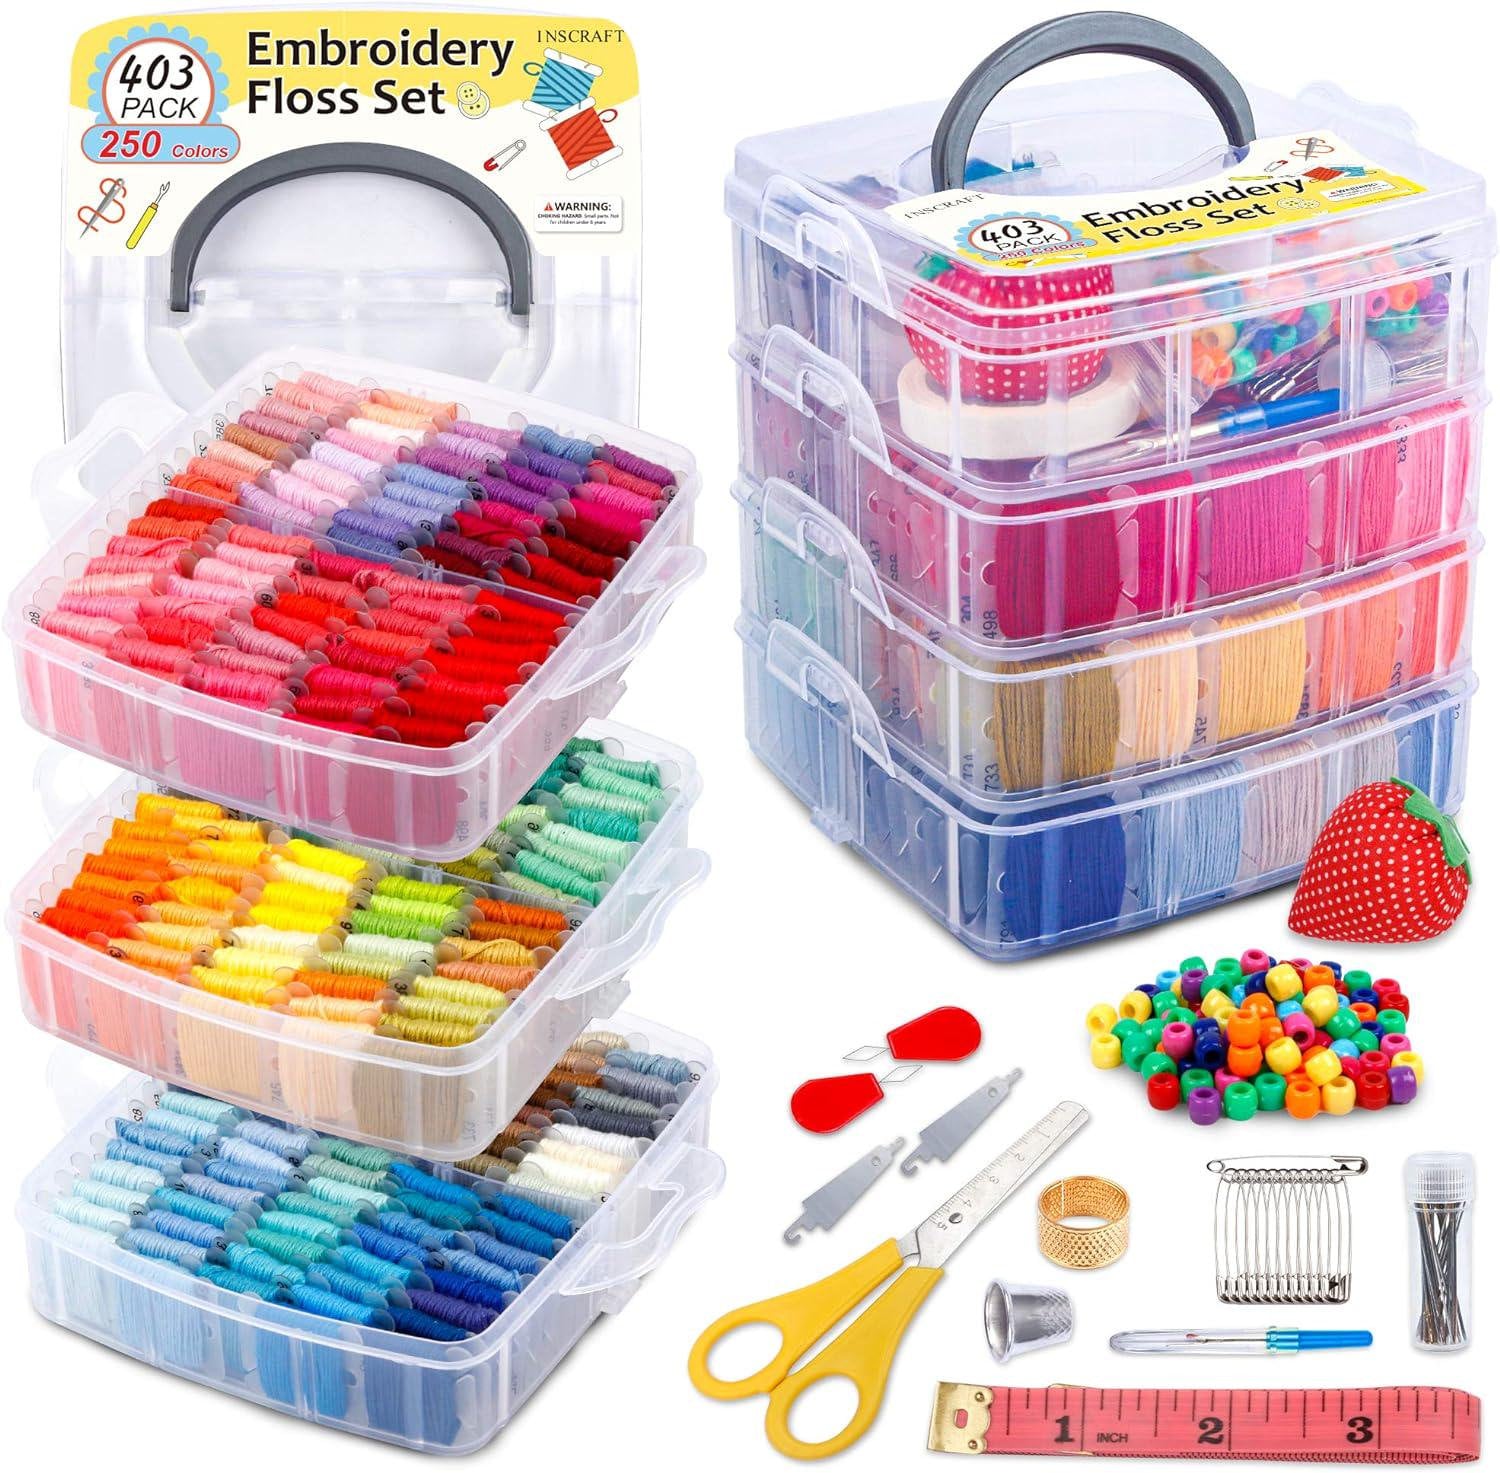 Inscraft 403 Pack Embroidery Floss Set, 250 Colors Cross Stitch Friendship Bracelet Thread with 153 Pcs Cross Stitch Tool, 4-Tier Transparent Box